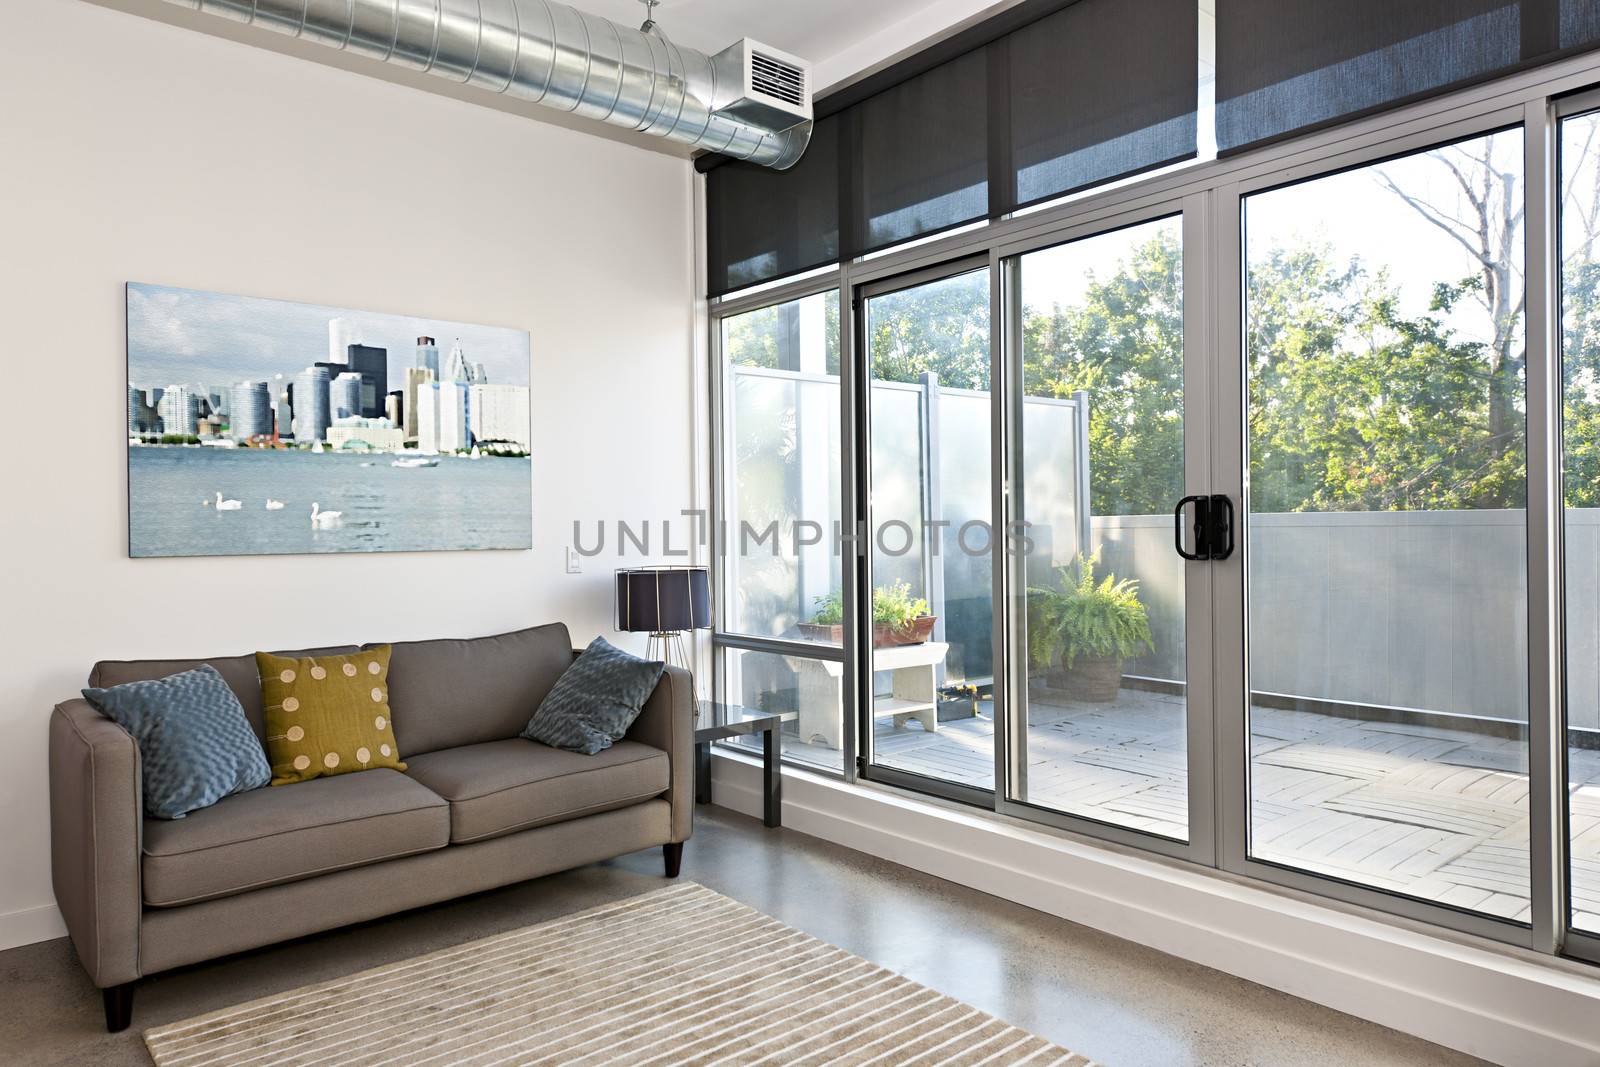 Living room with sliding glass door to balcony - artwork from photographer portfolio